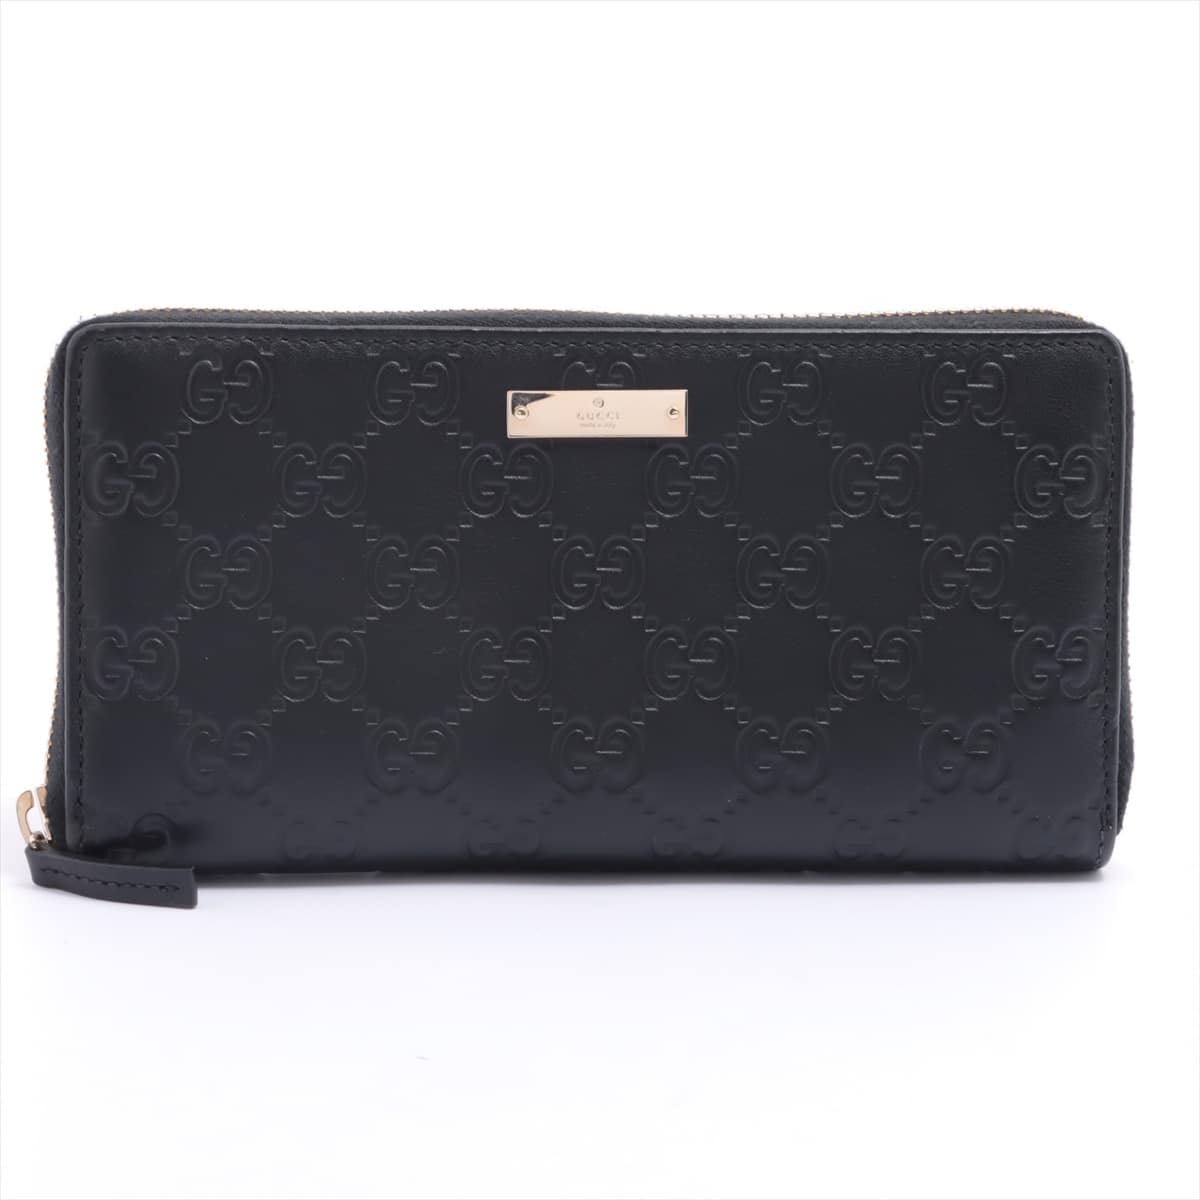 Gucci Guccissima Round zip 307980 Leather Wallet Black